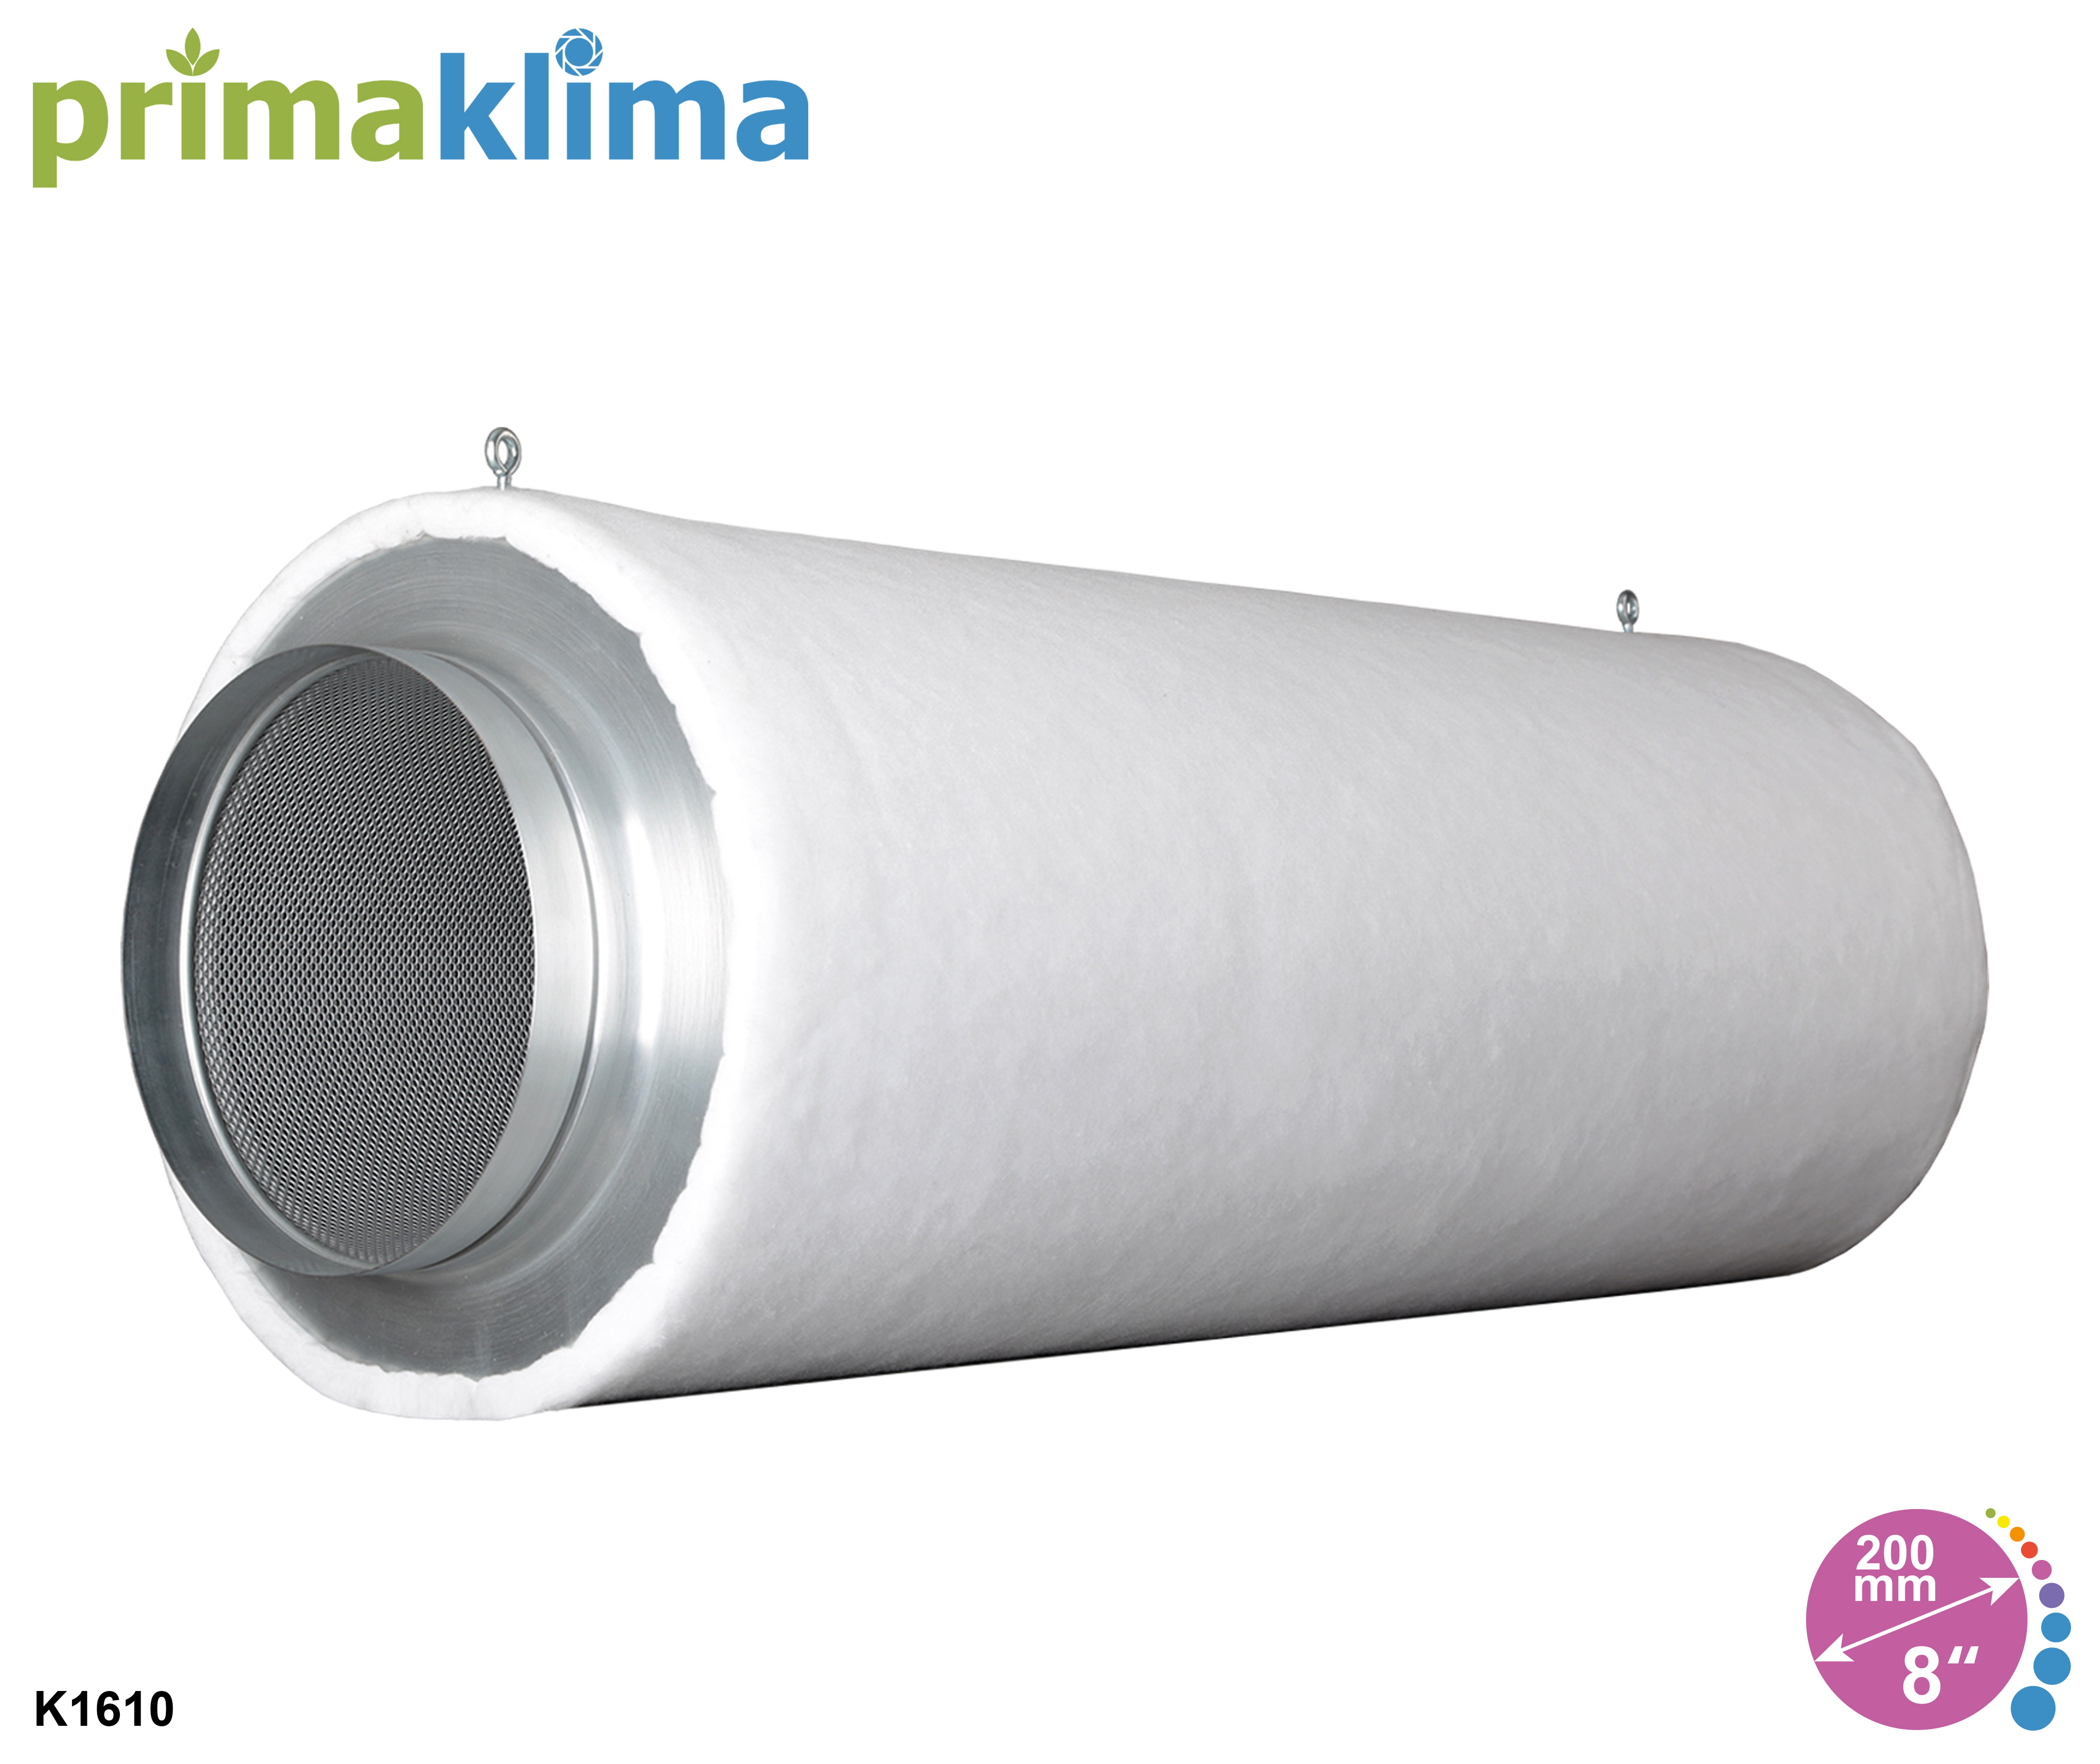 PRIMAKLIMA PRIMA KLIMA Industrie K1610 1650m3/h - Ø200mm